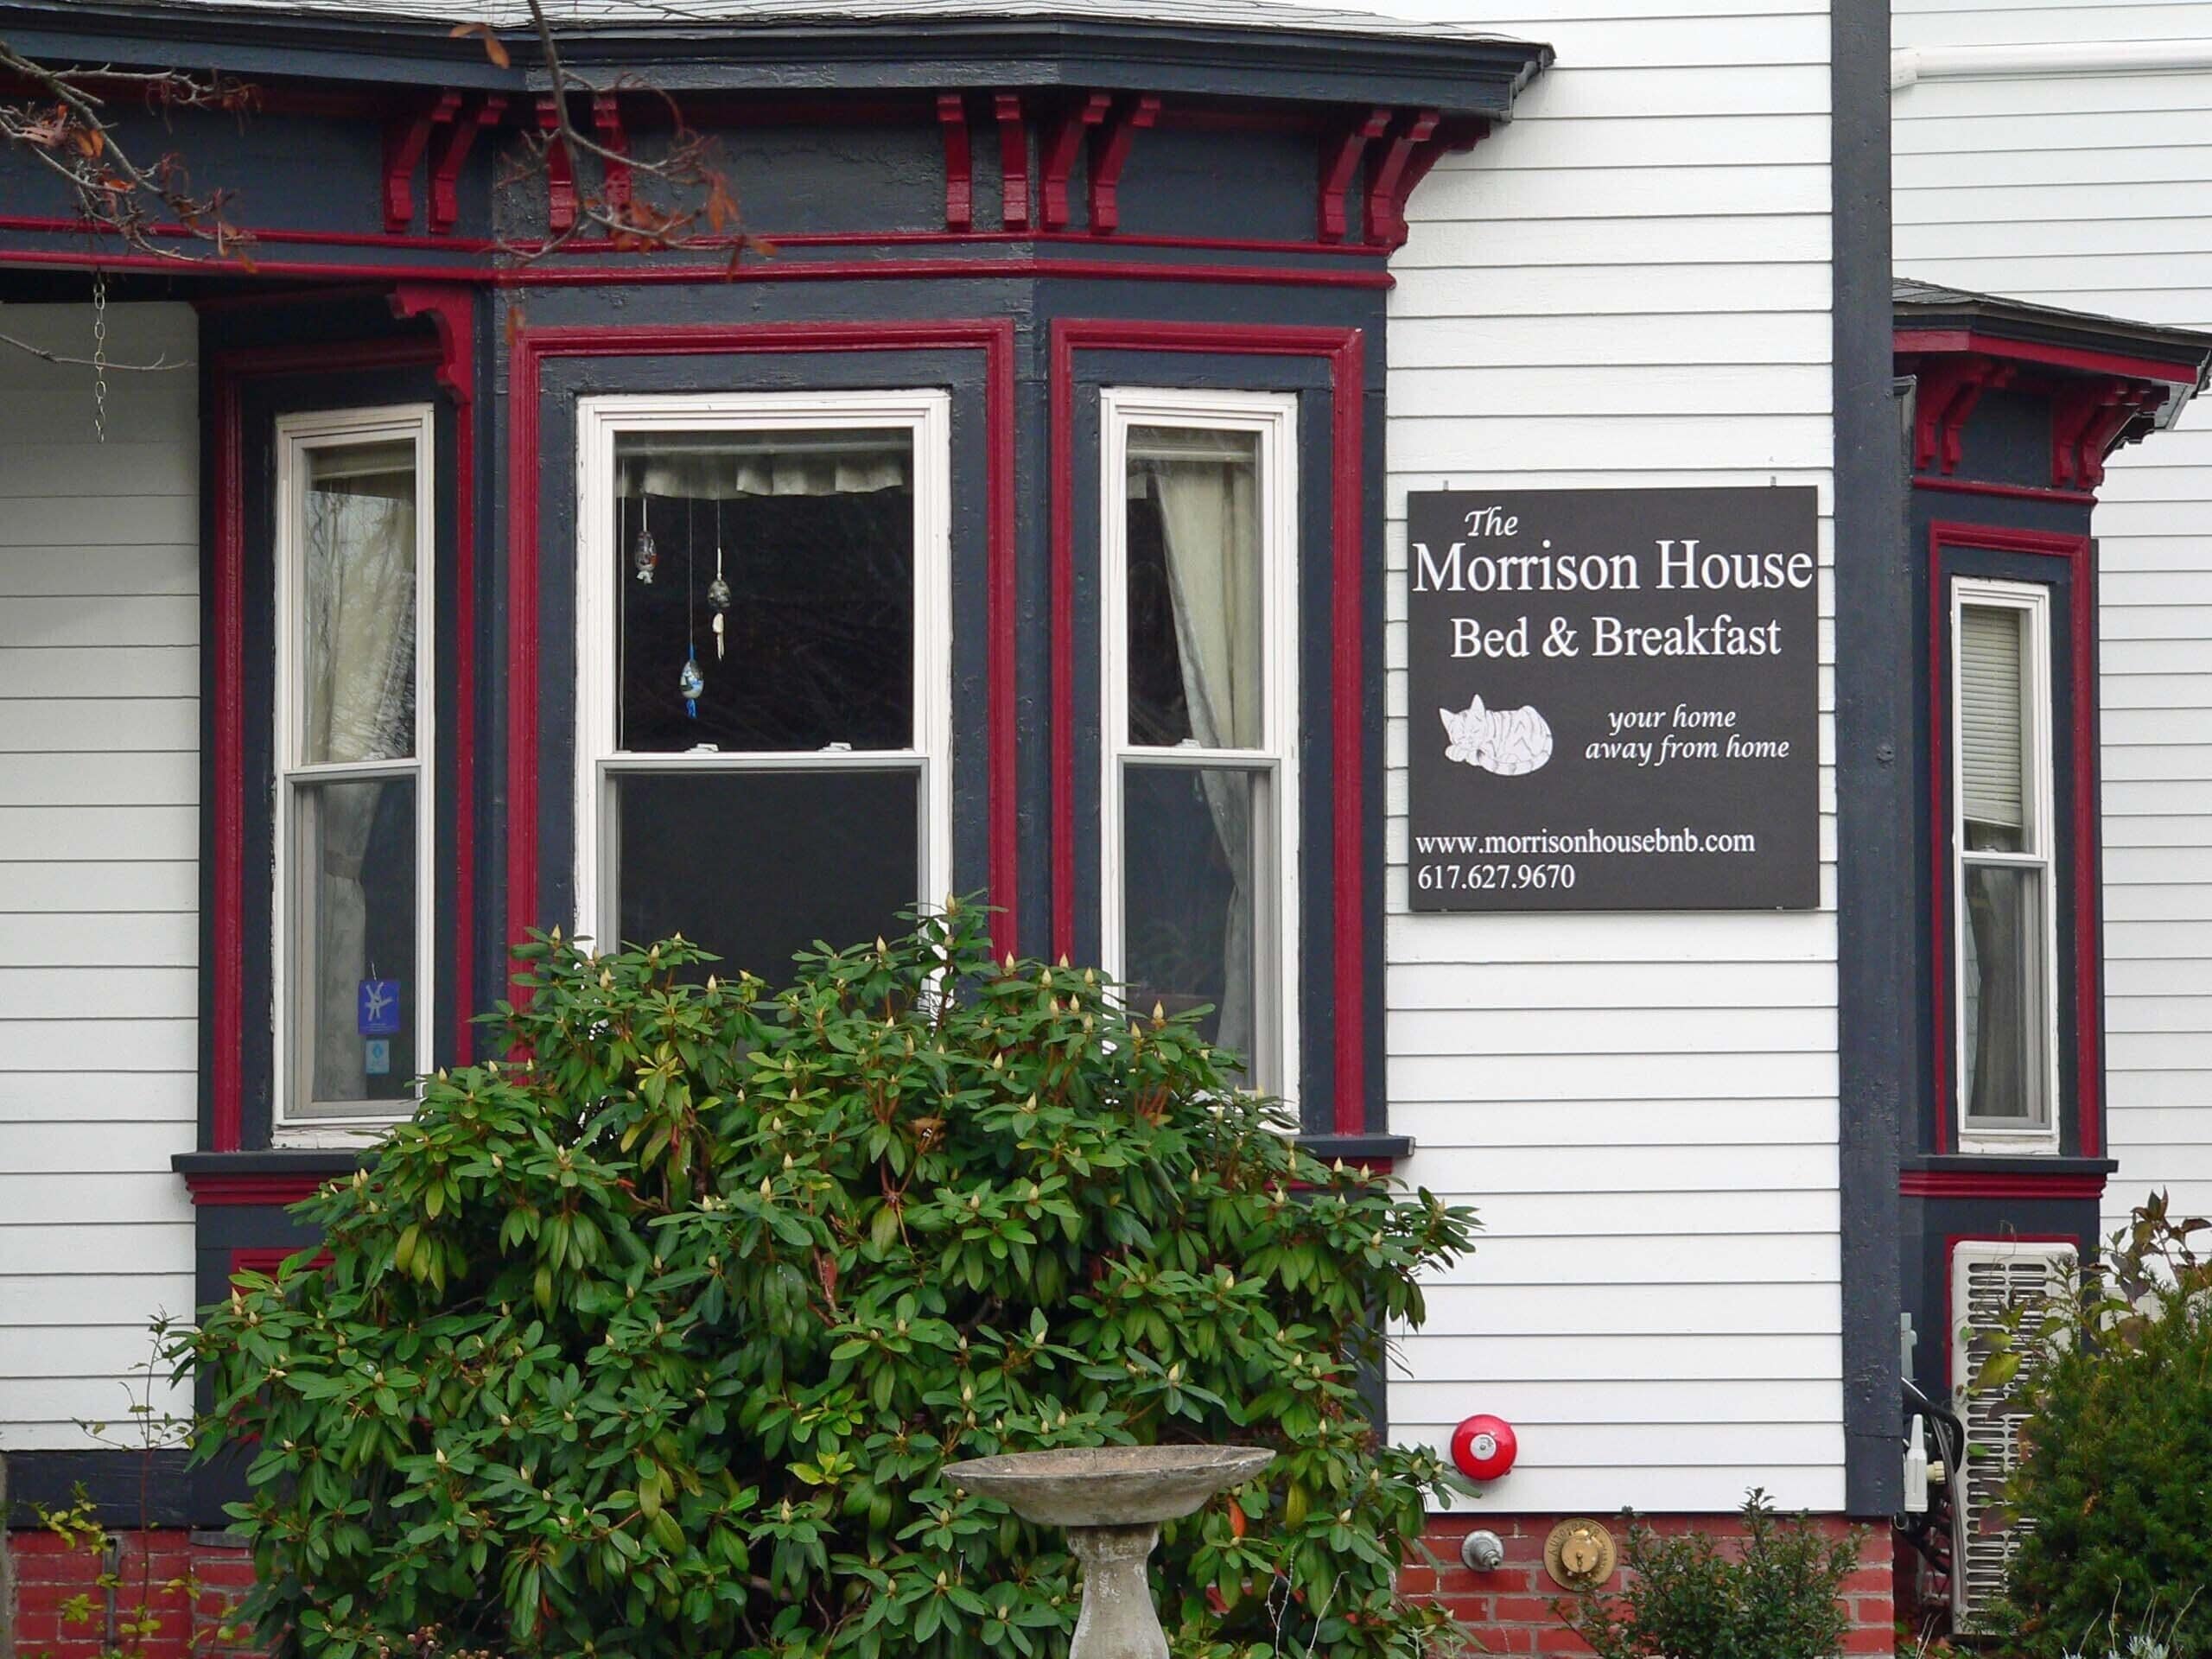 The Morrison House